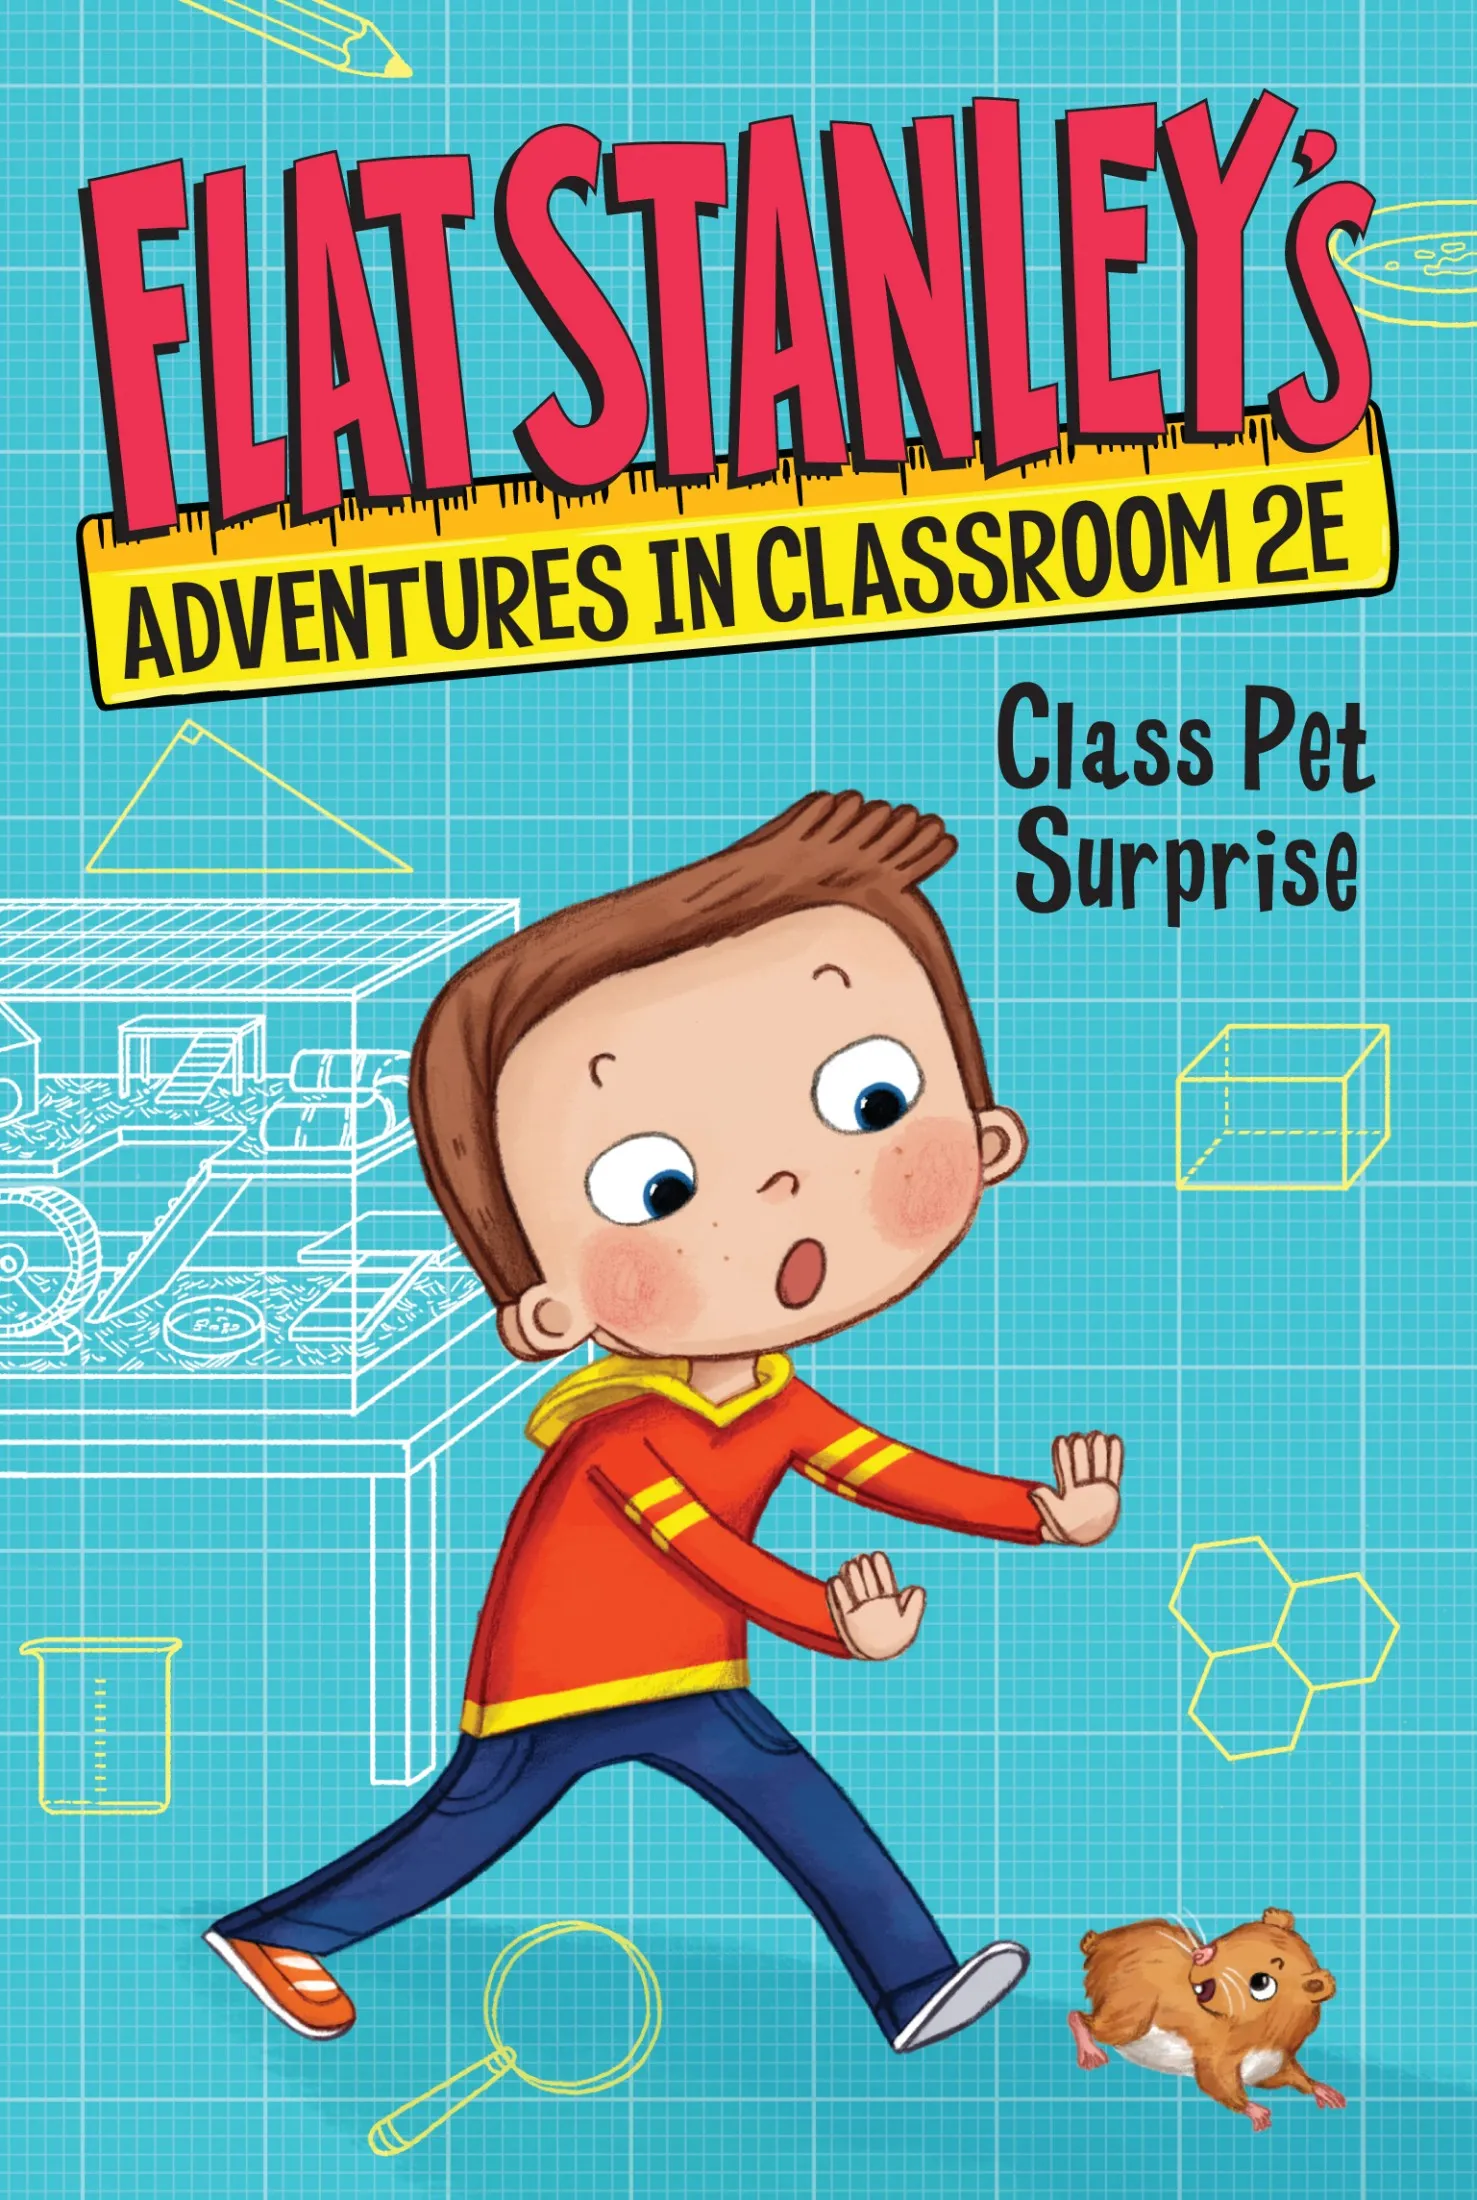 Class Pet Surprise (Flat Stanley's Adventures in Classroom 2E #1)